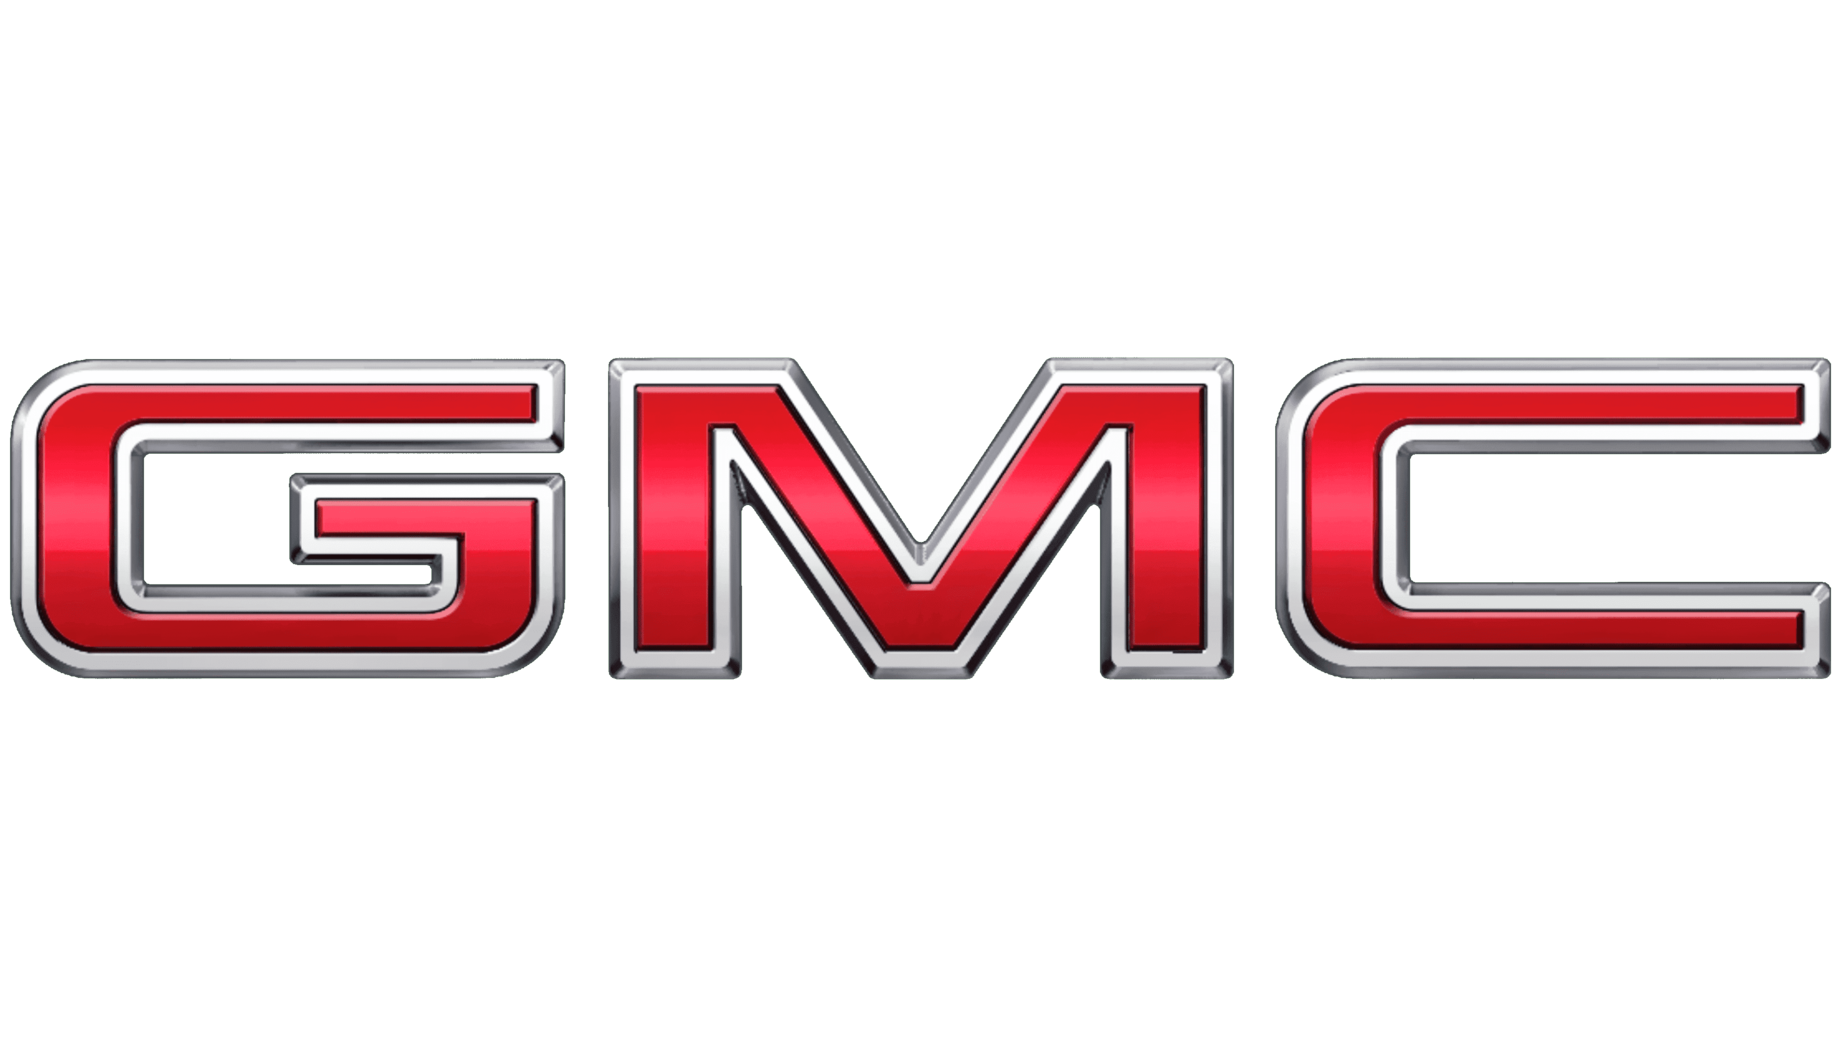 Gmc sign 2014 present